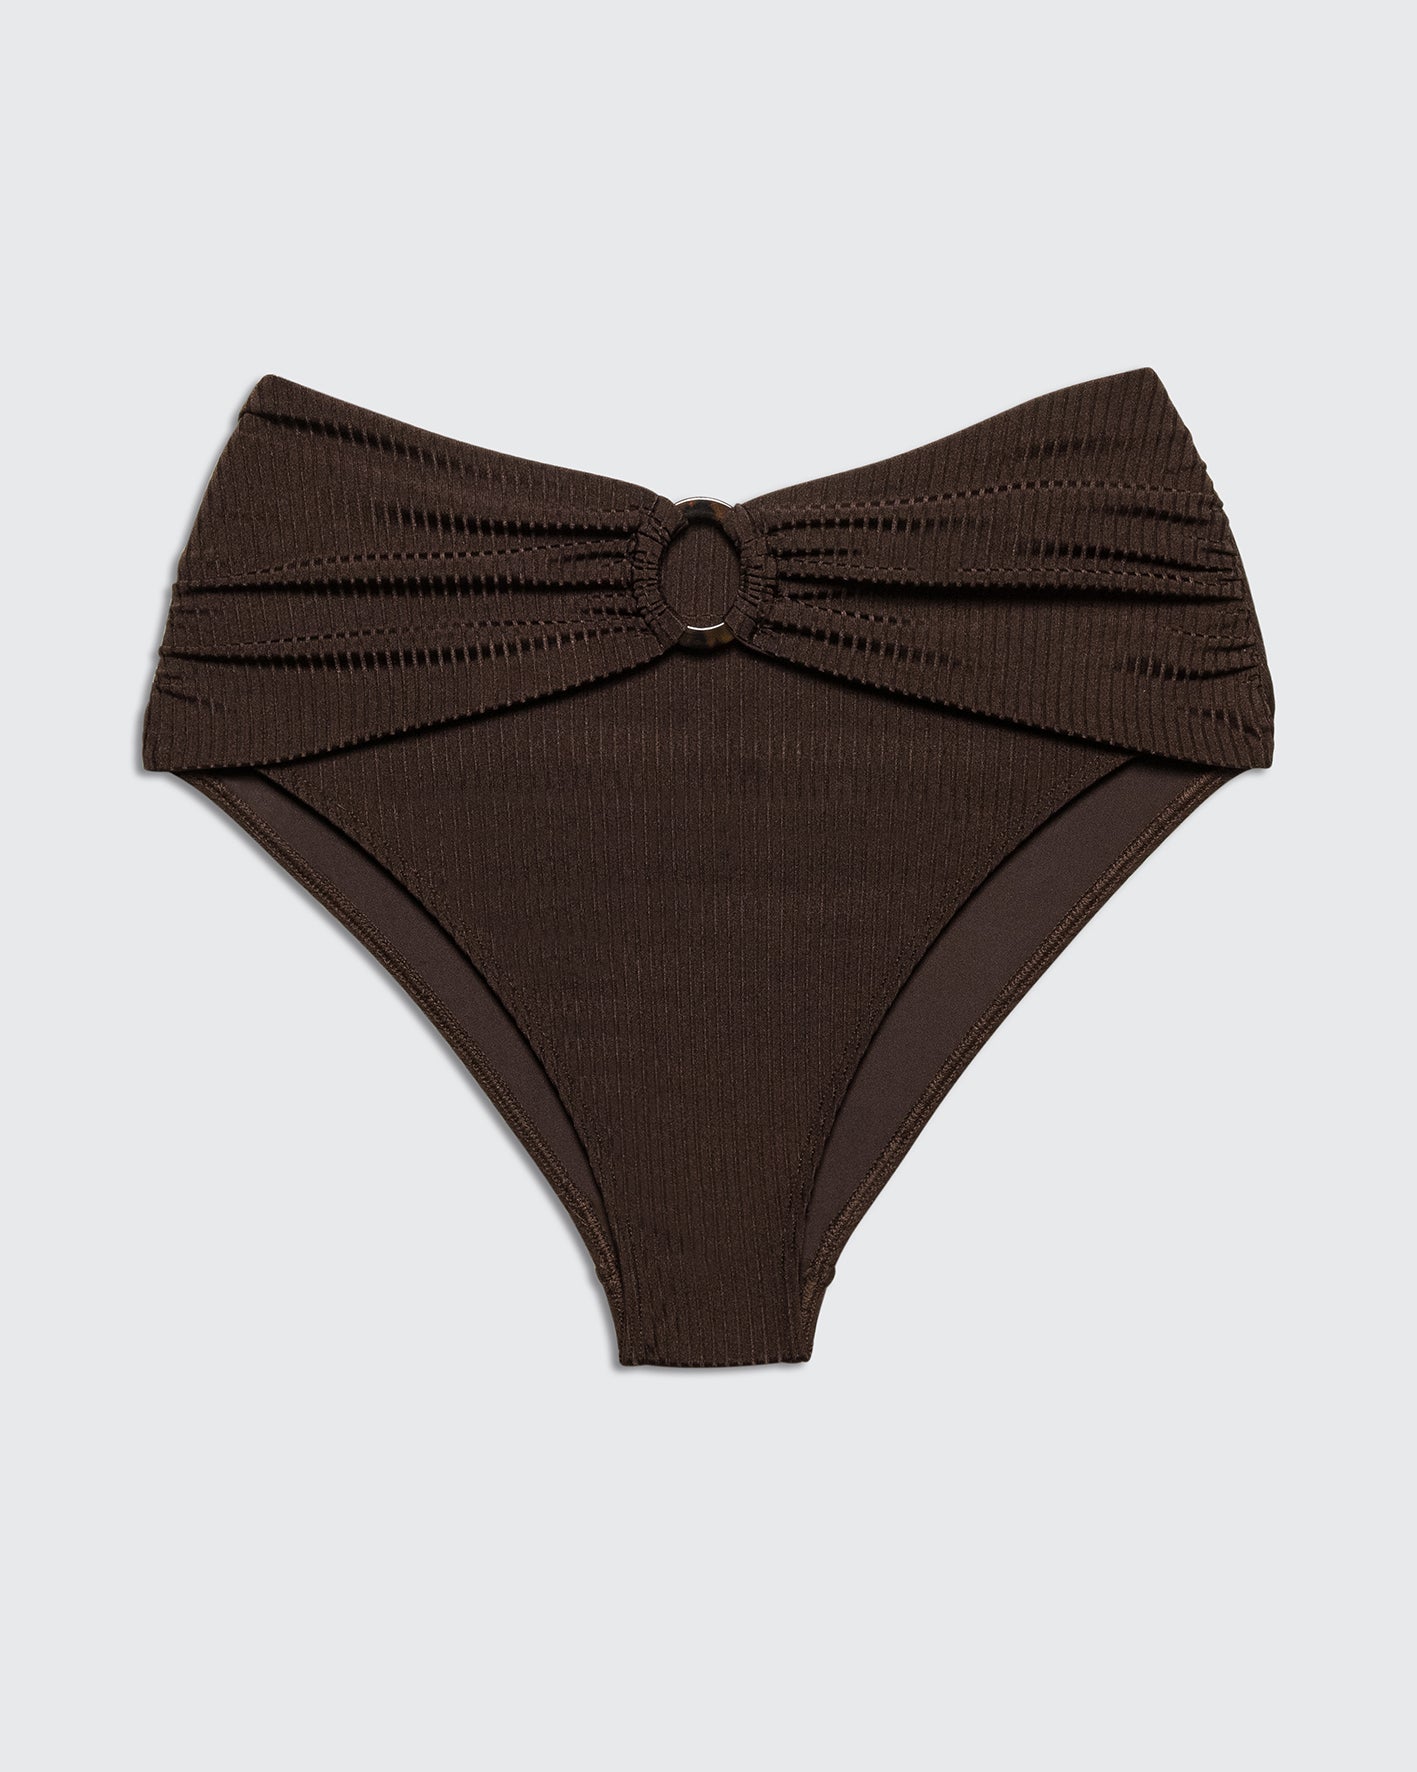 PUMA BOTTOM BROWN RIB - BIKINI -BiliBlond Swimwear